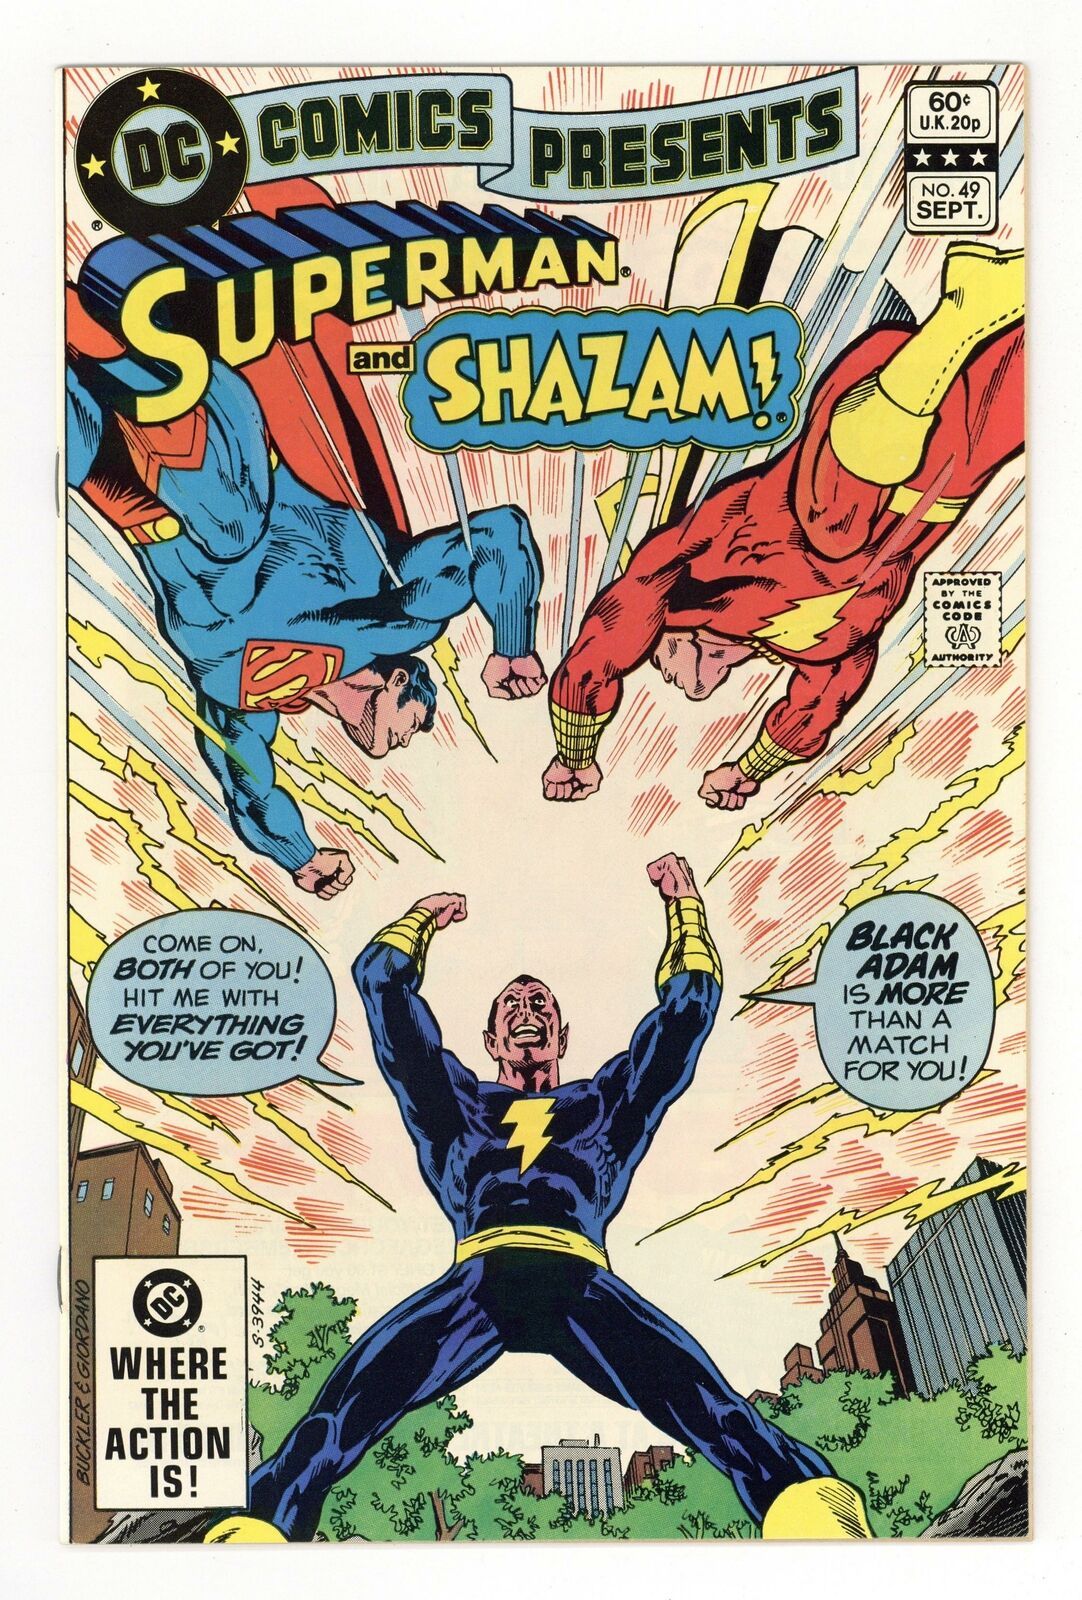 9. sort adam vs superman shazam